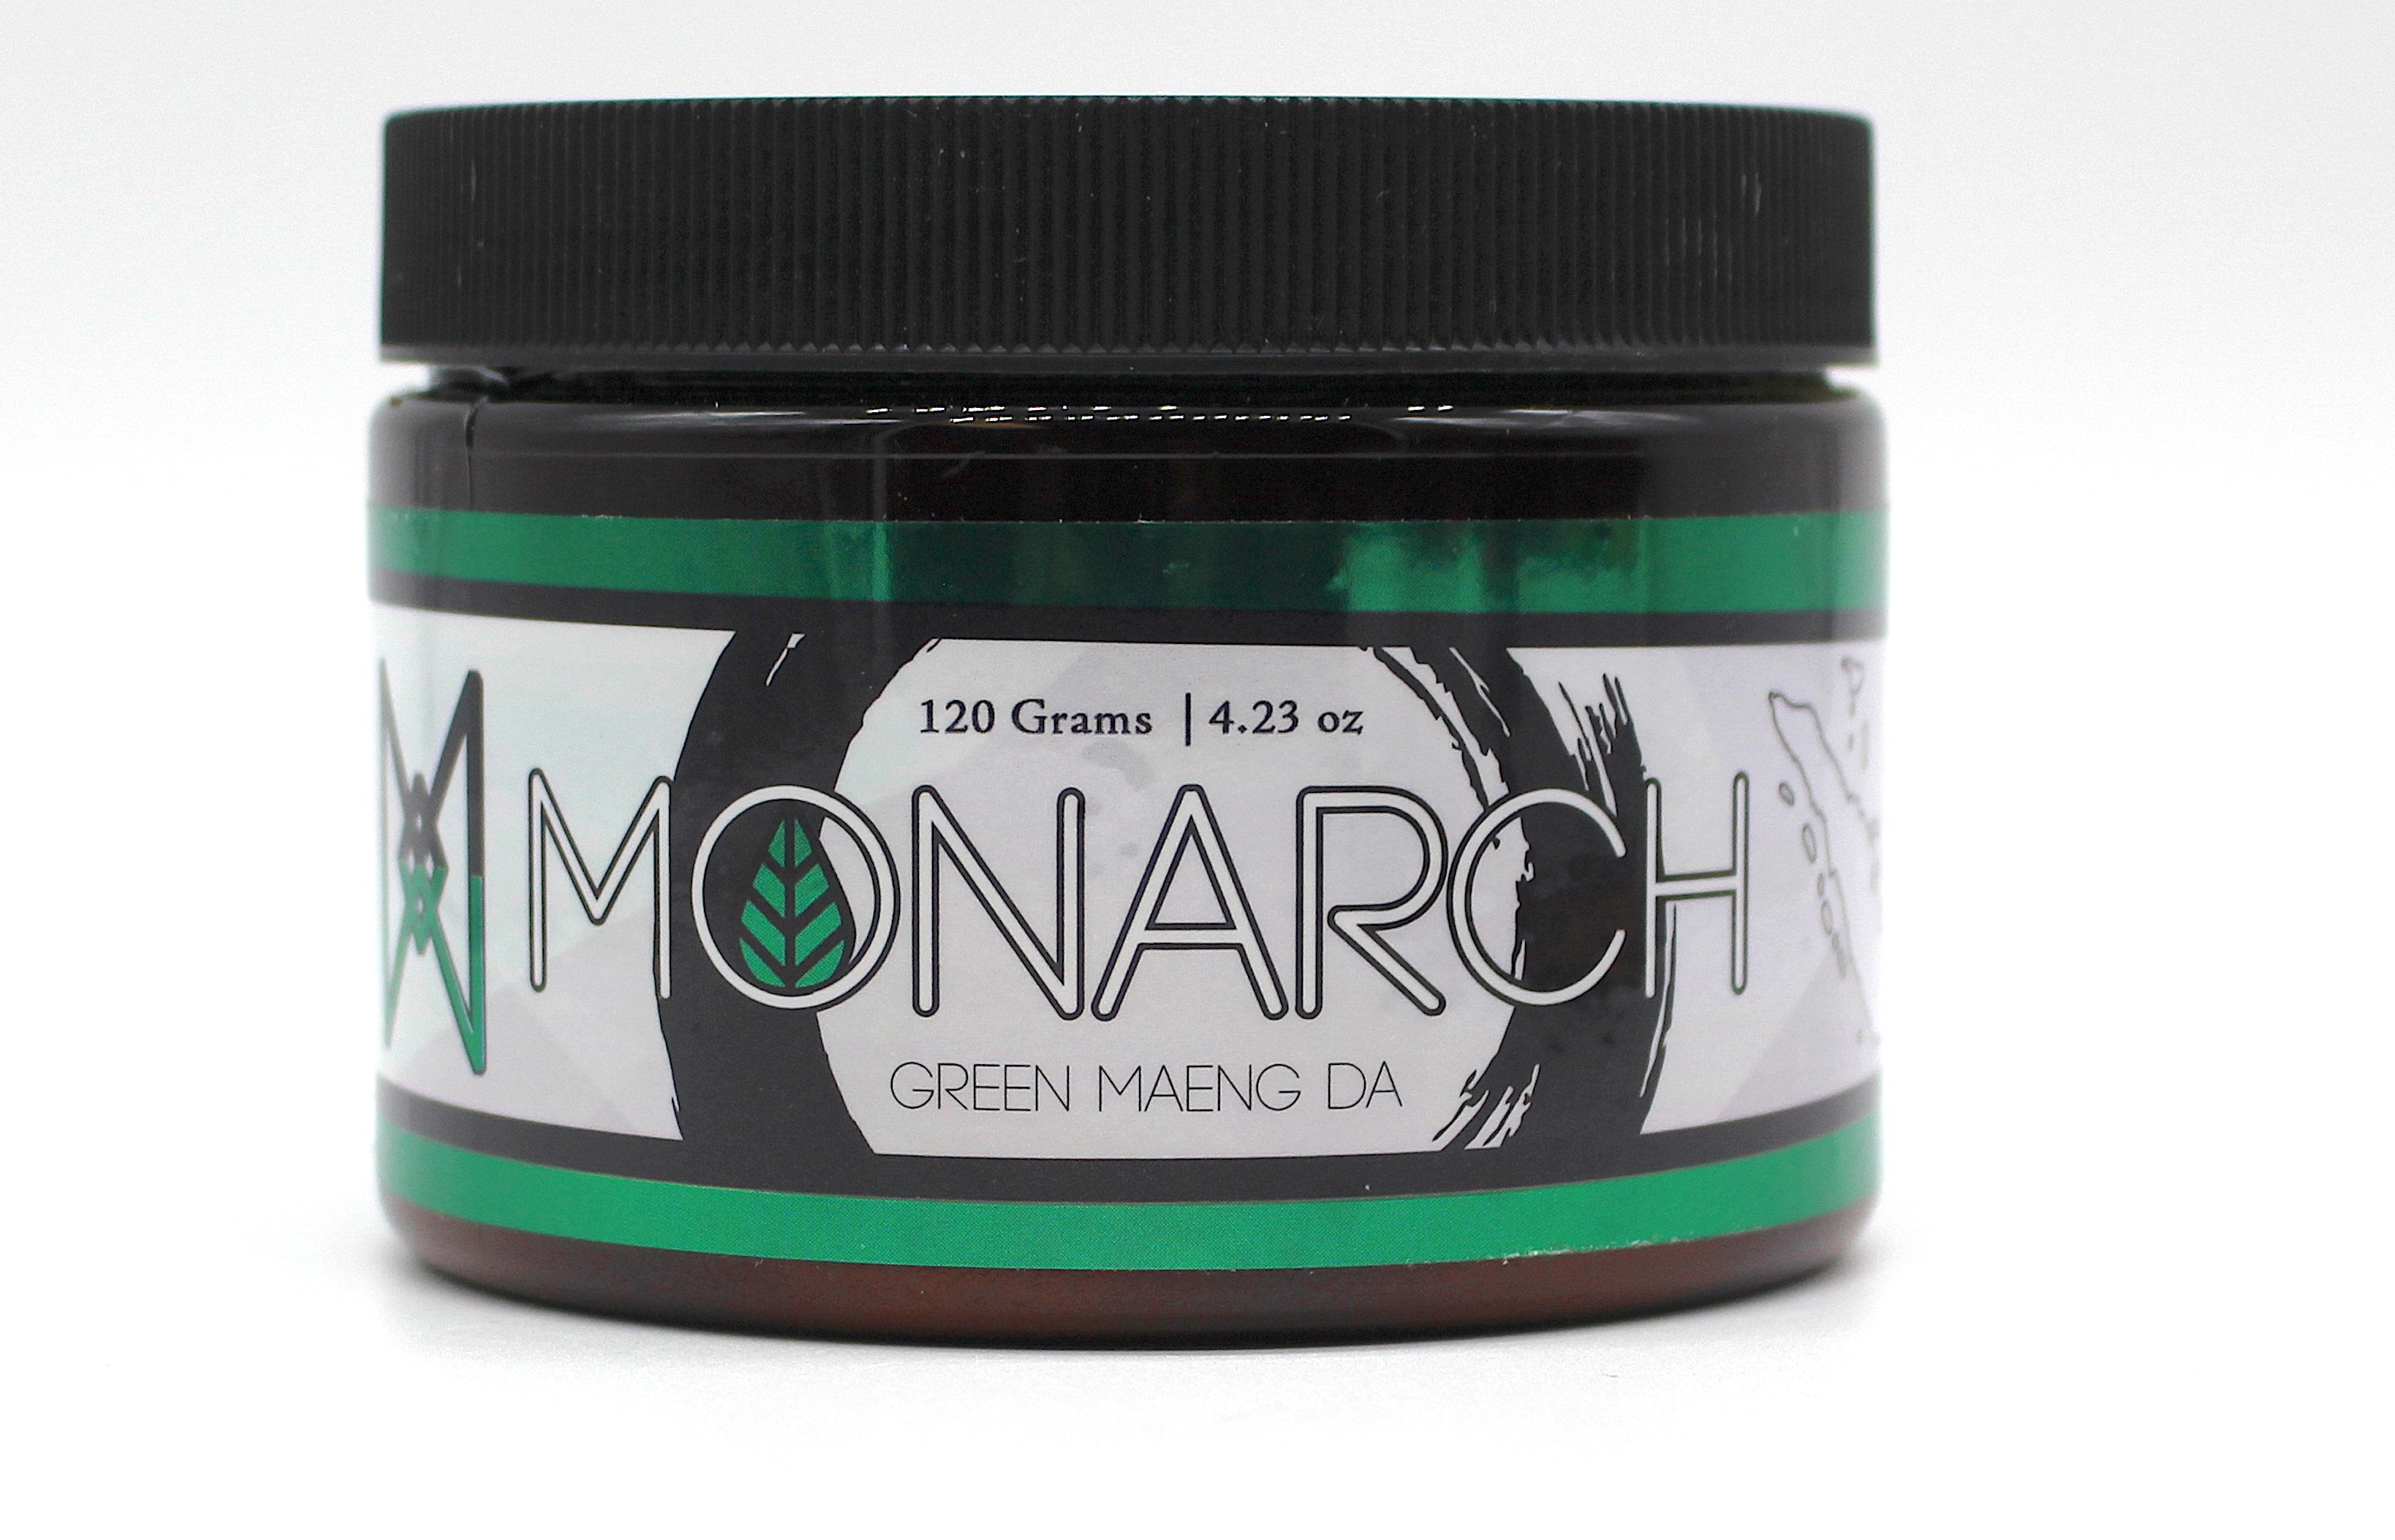 Monarch Premium Kratom 120G Powder Jar